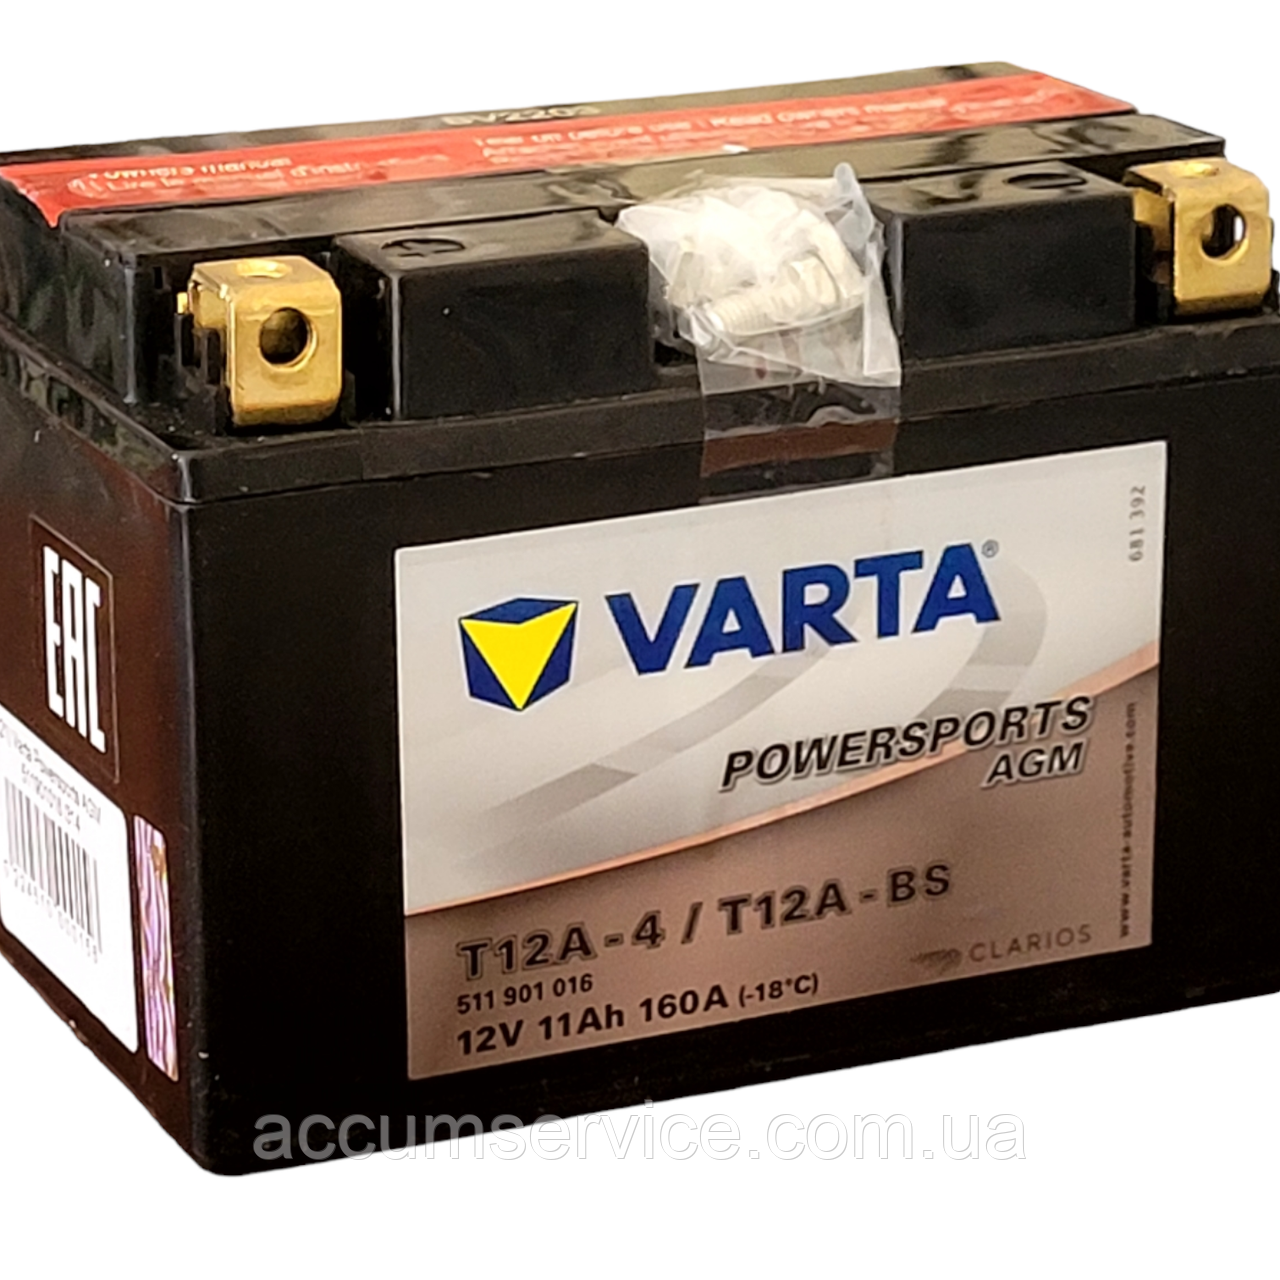 Акумулятор Varta Powersports AGM 511901016 I314